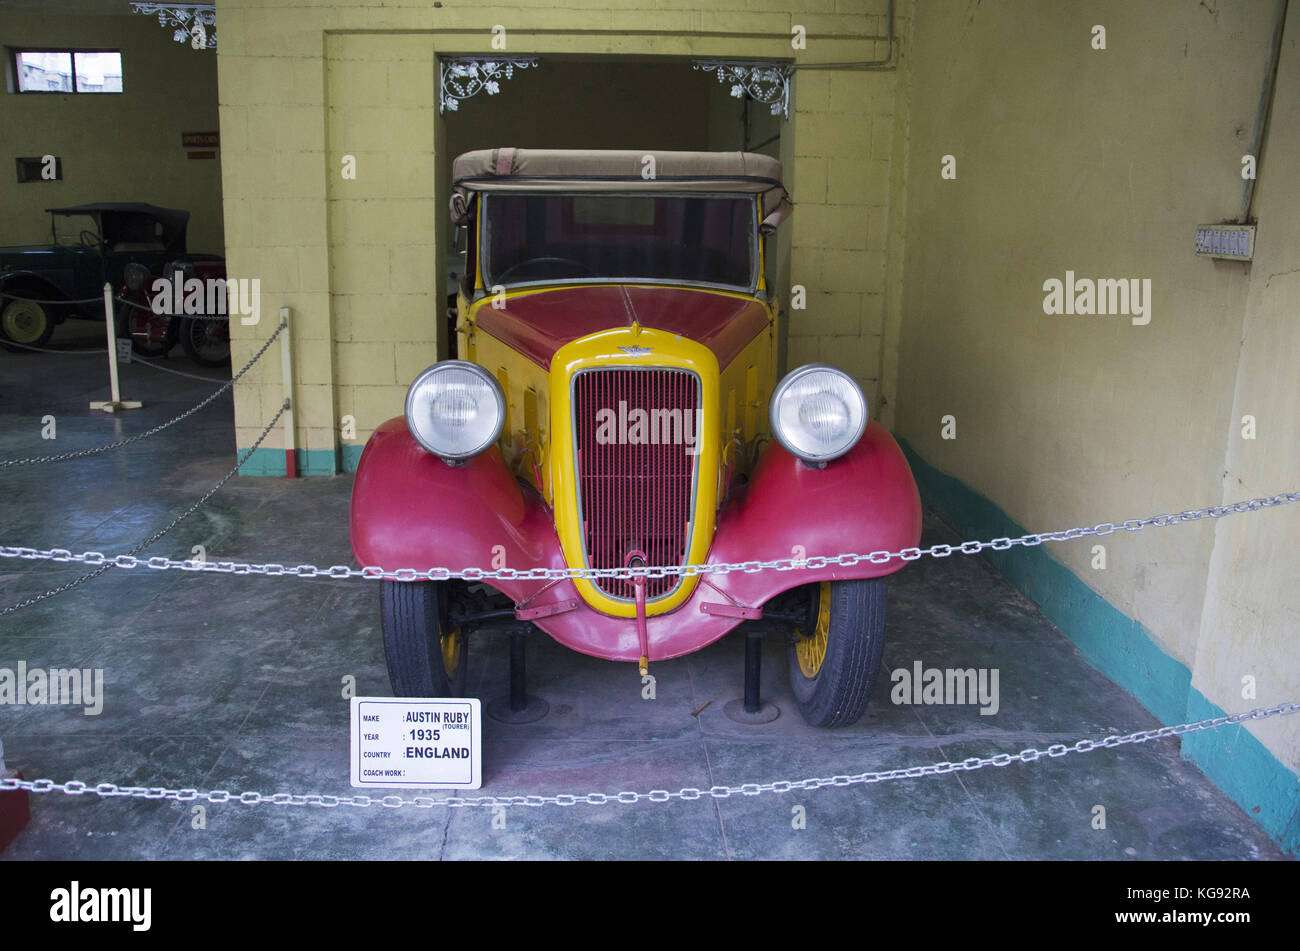 Austin ruby (anno 1935), coach lavoro - tourer, Inghilterra auto mondo vintage car museum, Ahmedabad, Gujarat, India Foto Stock